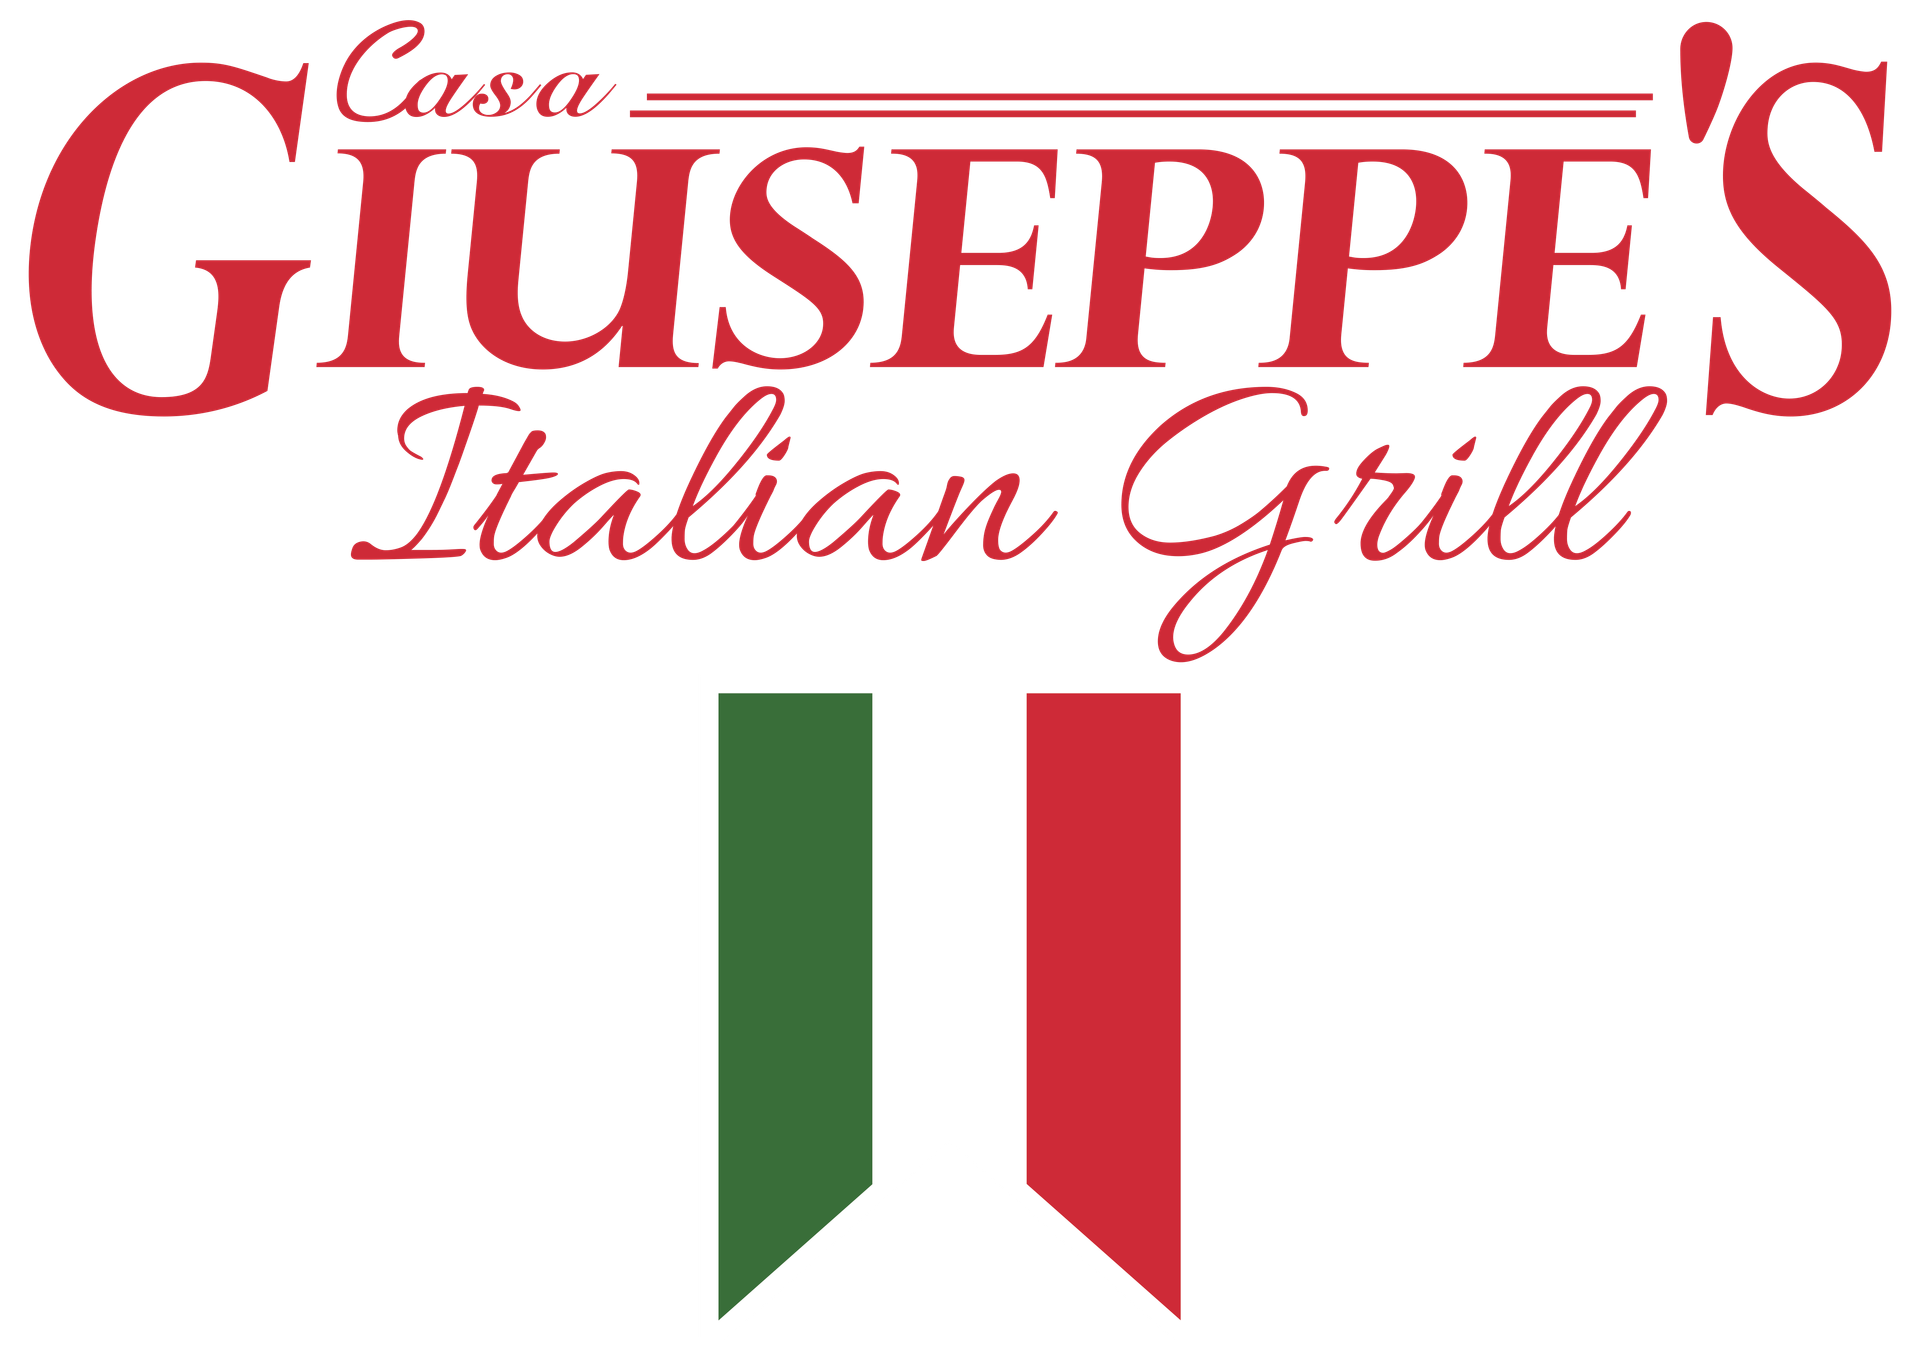 Casa Giuseppe's Italian Grill